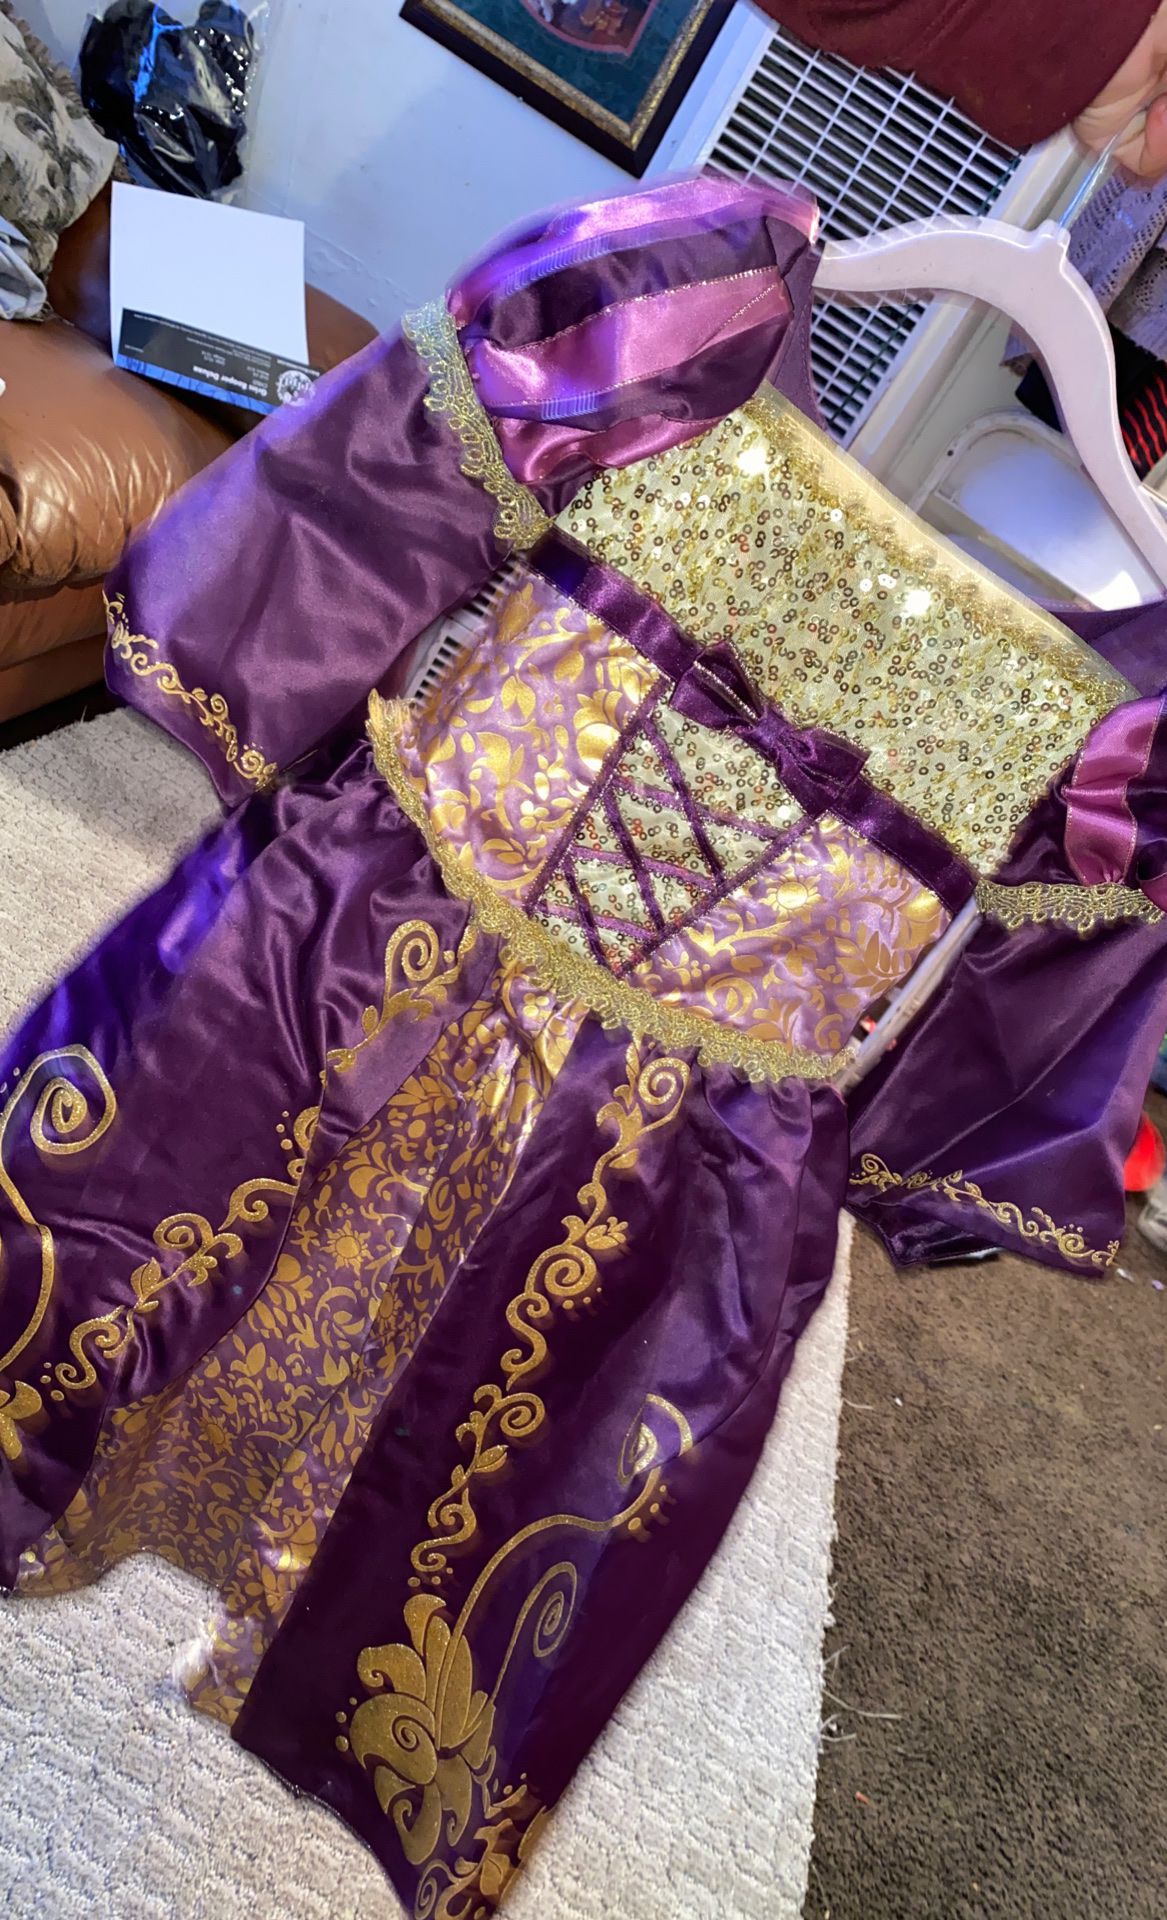 Rapunzel costume